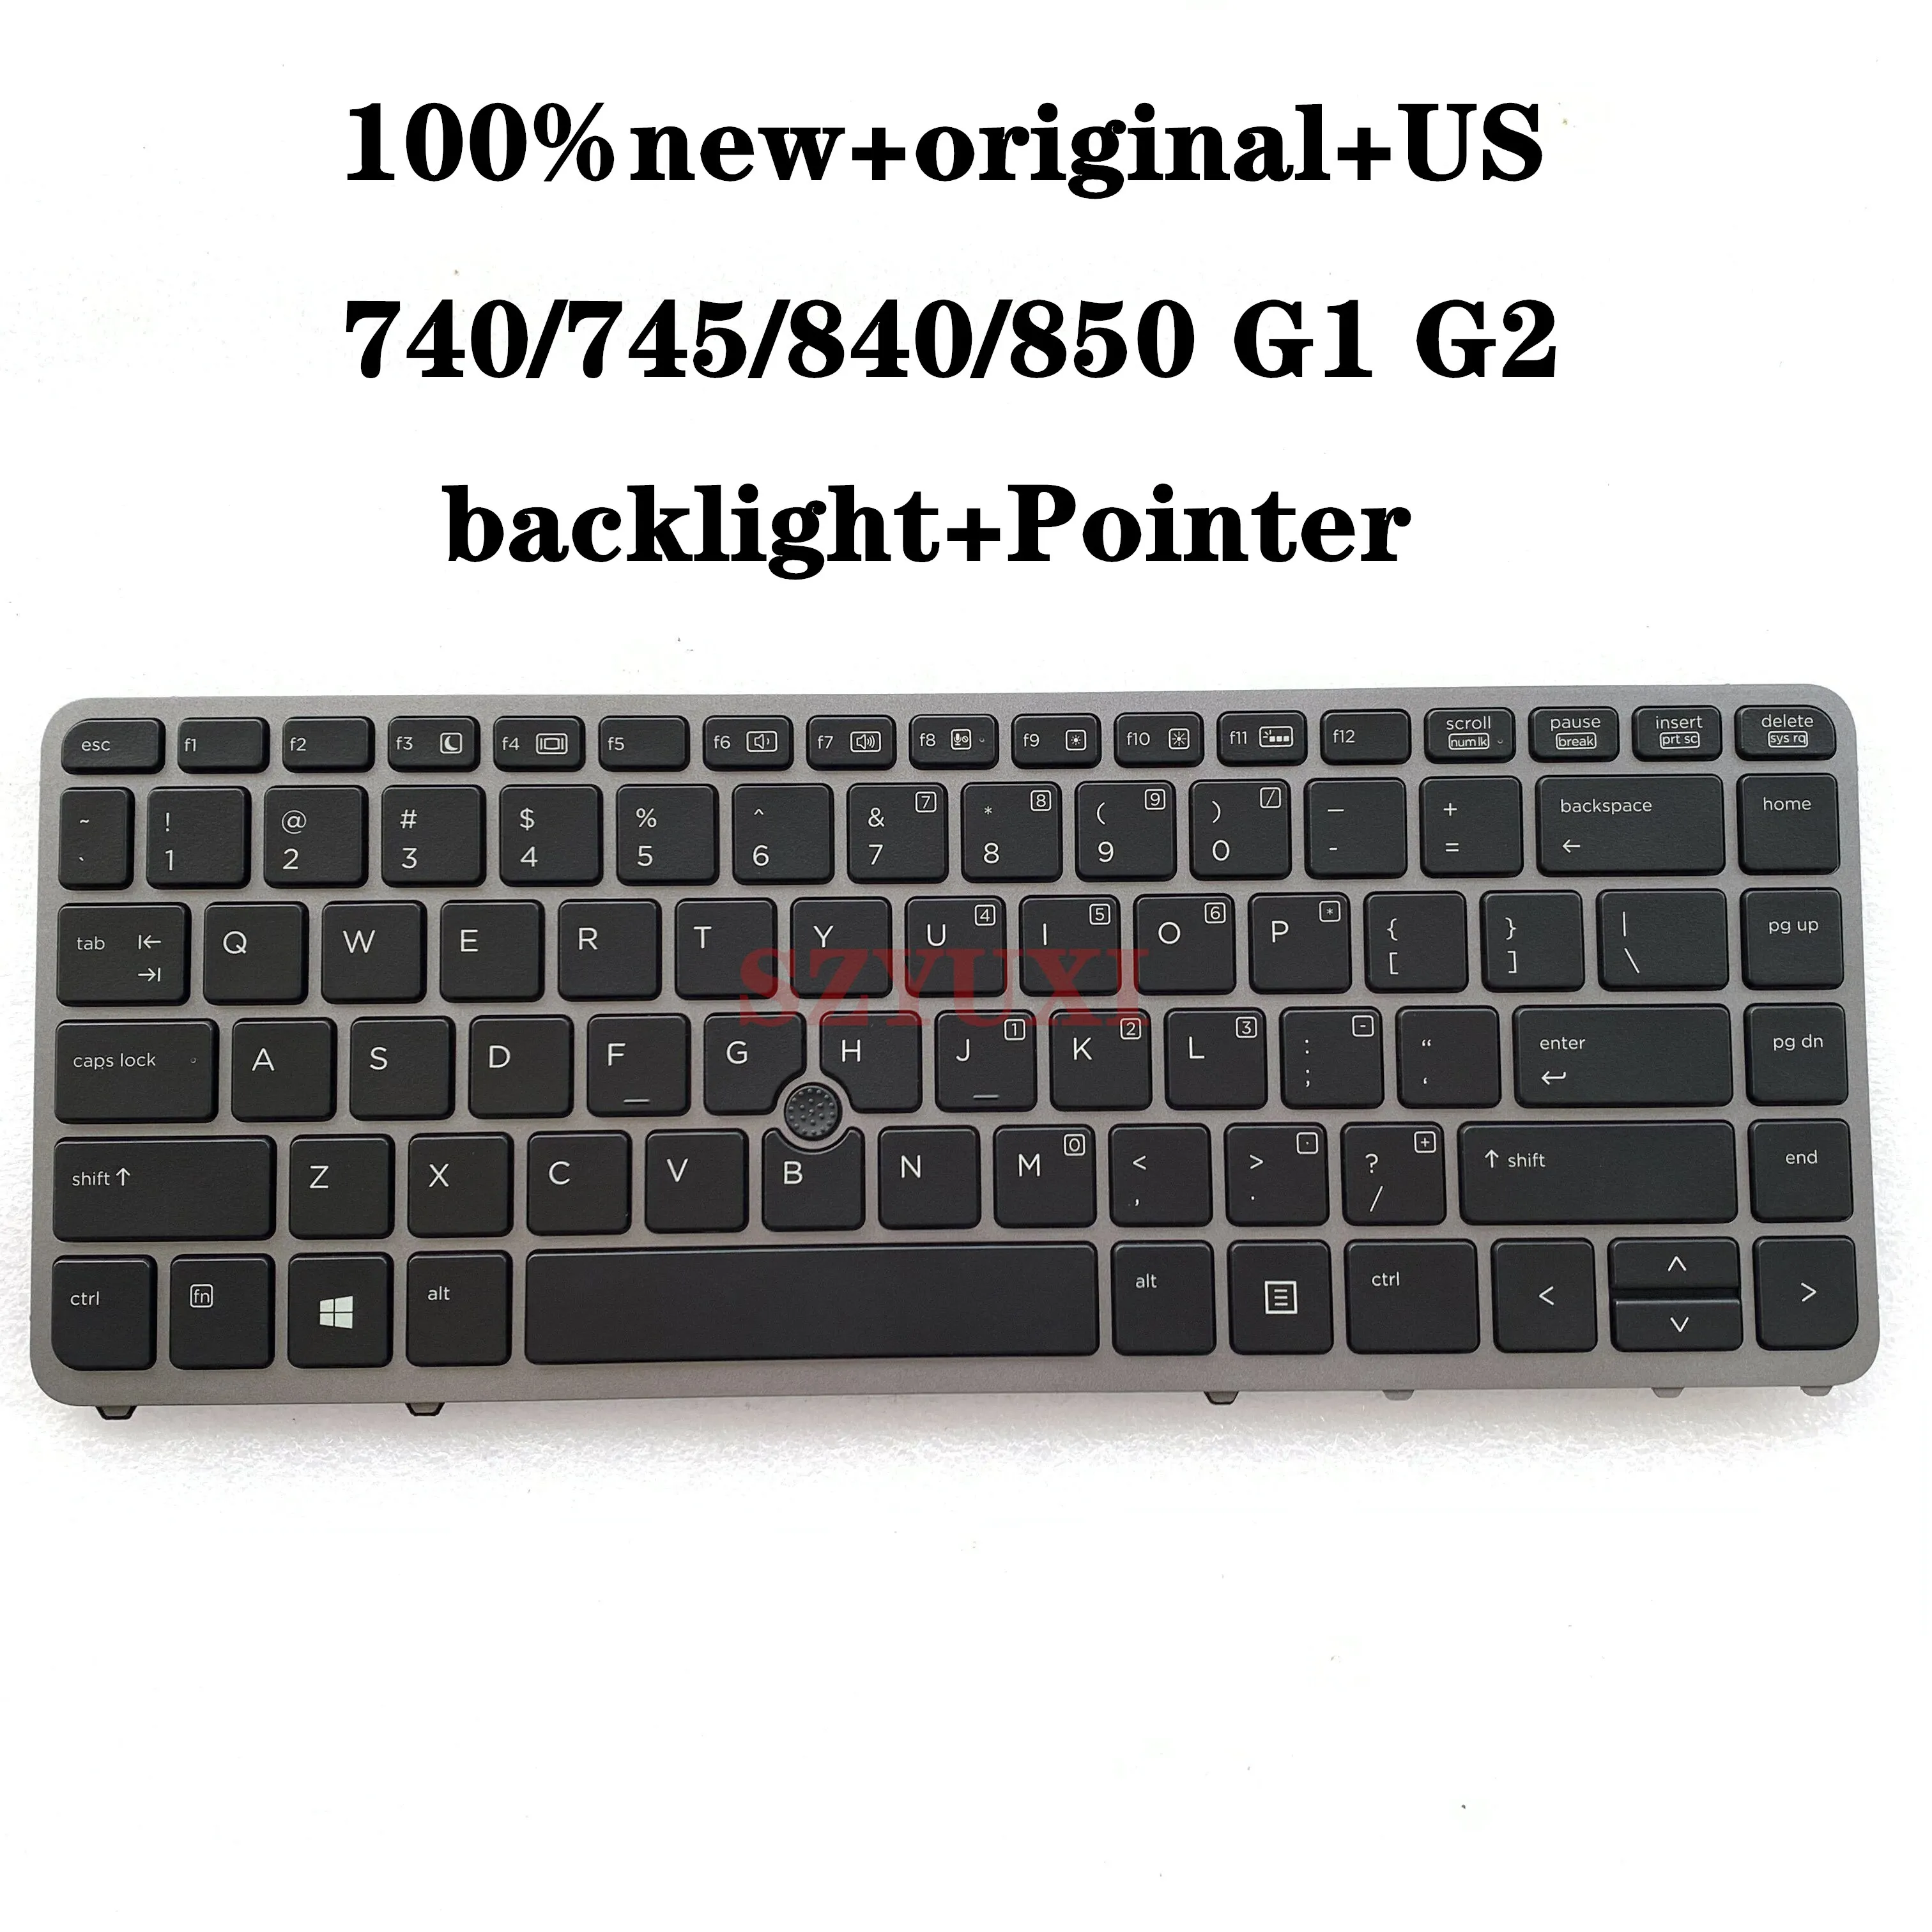 

100%NEW US Laptop keyboard For HP EliteBook 840 G1 850 G1 850 G2 840 G2 740 745 G1 G2 ZBook 14 W/ Pointer Silver 762758-001